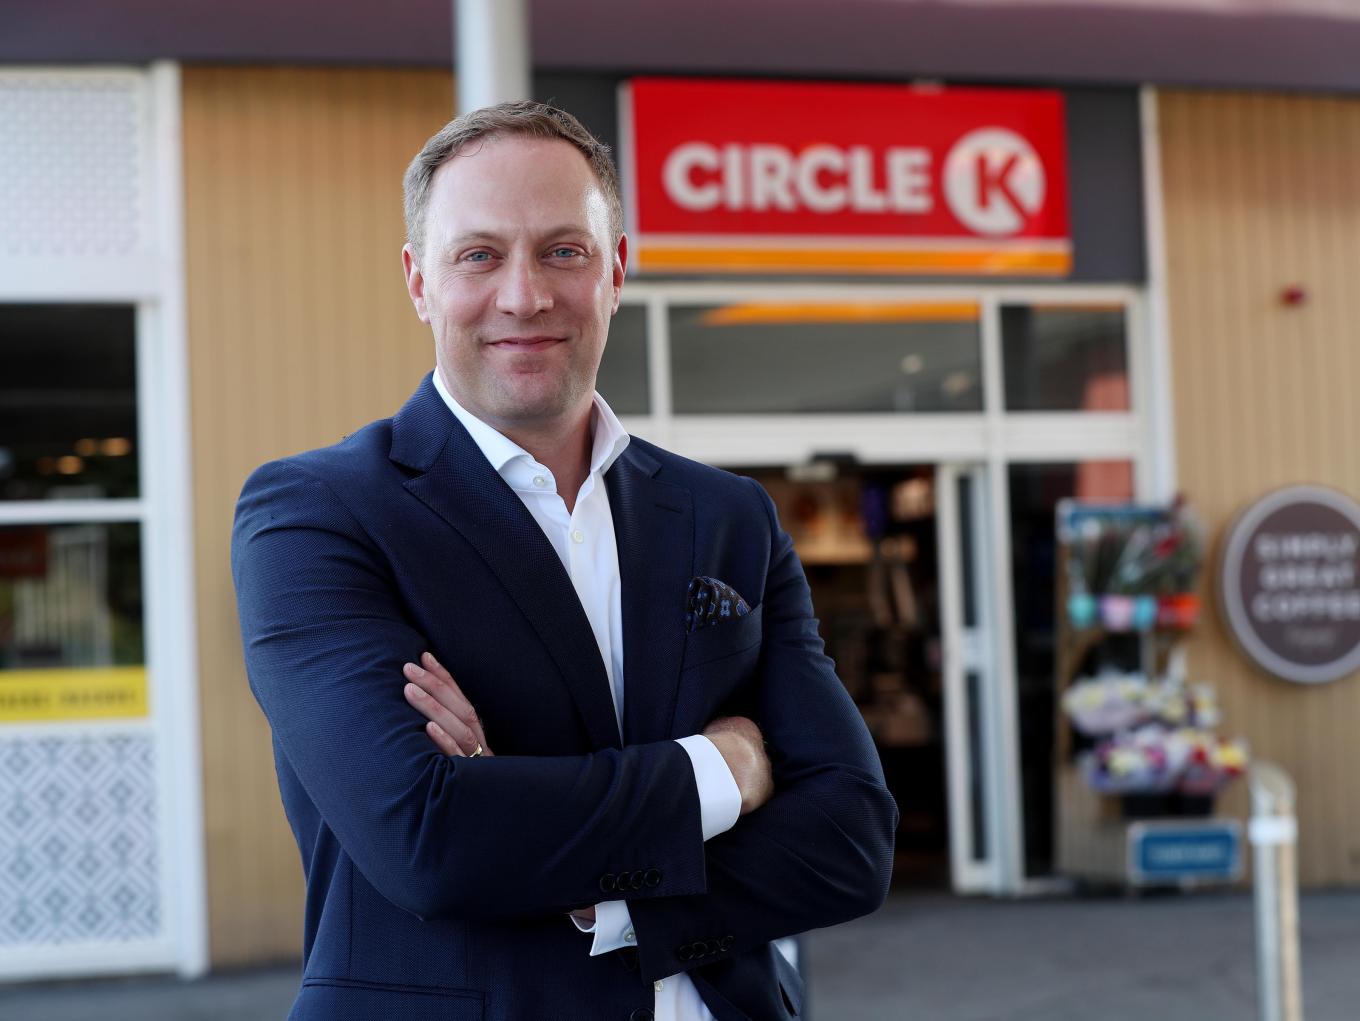 Circle K managing director Gordon Lawlor